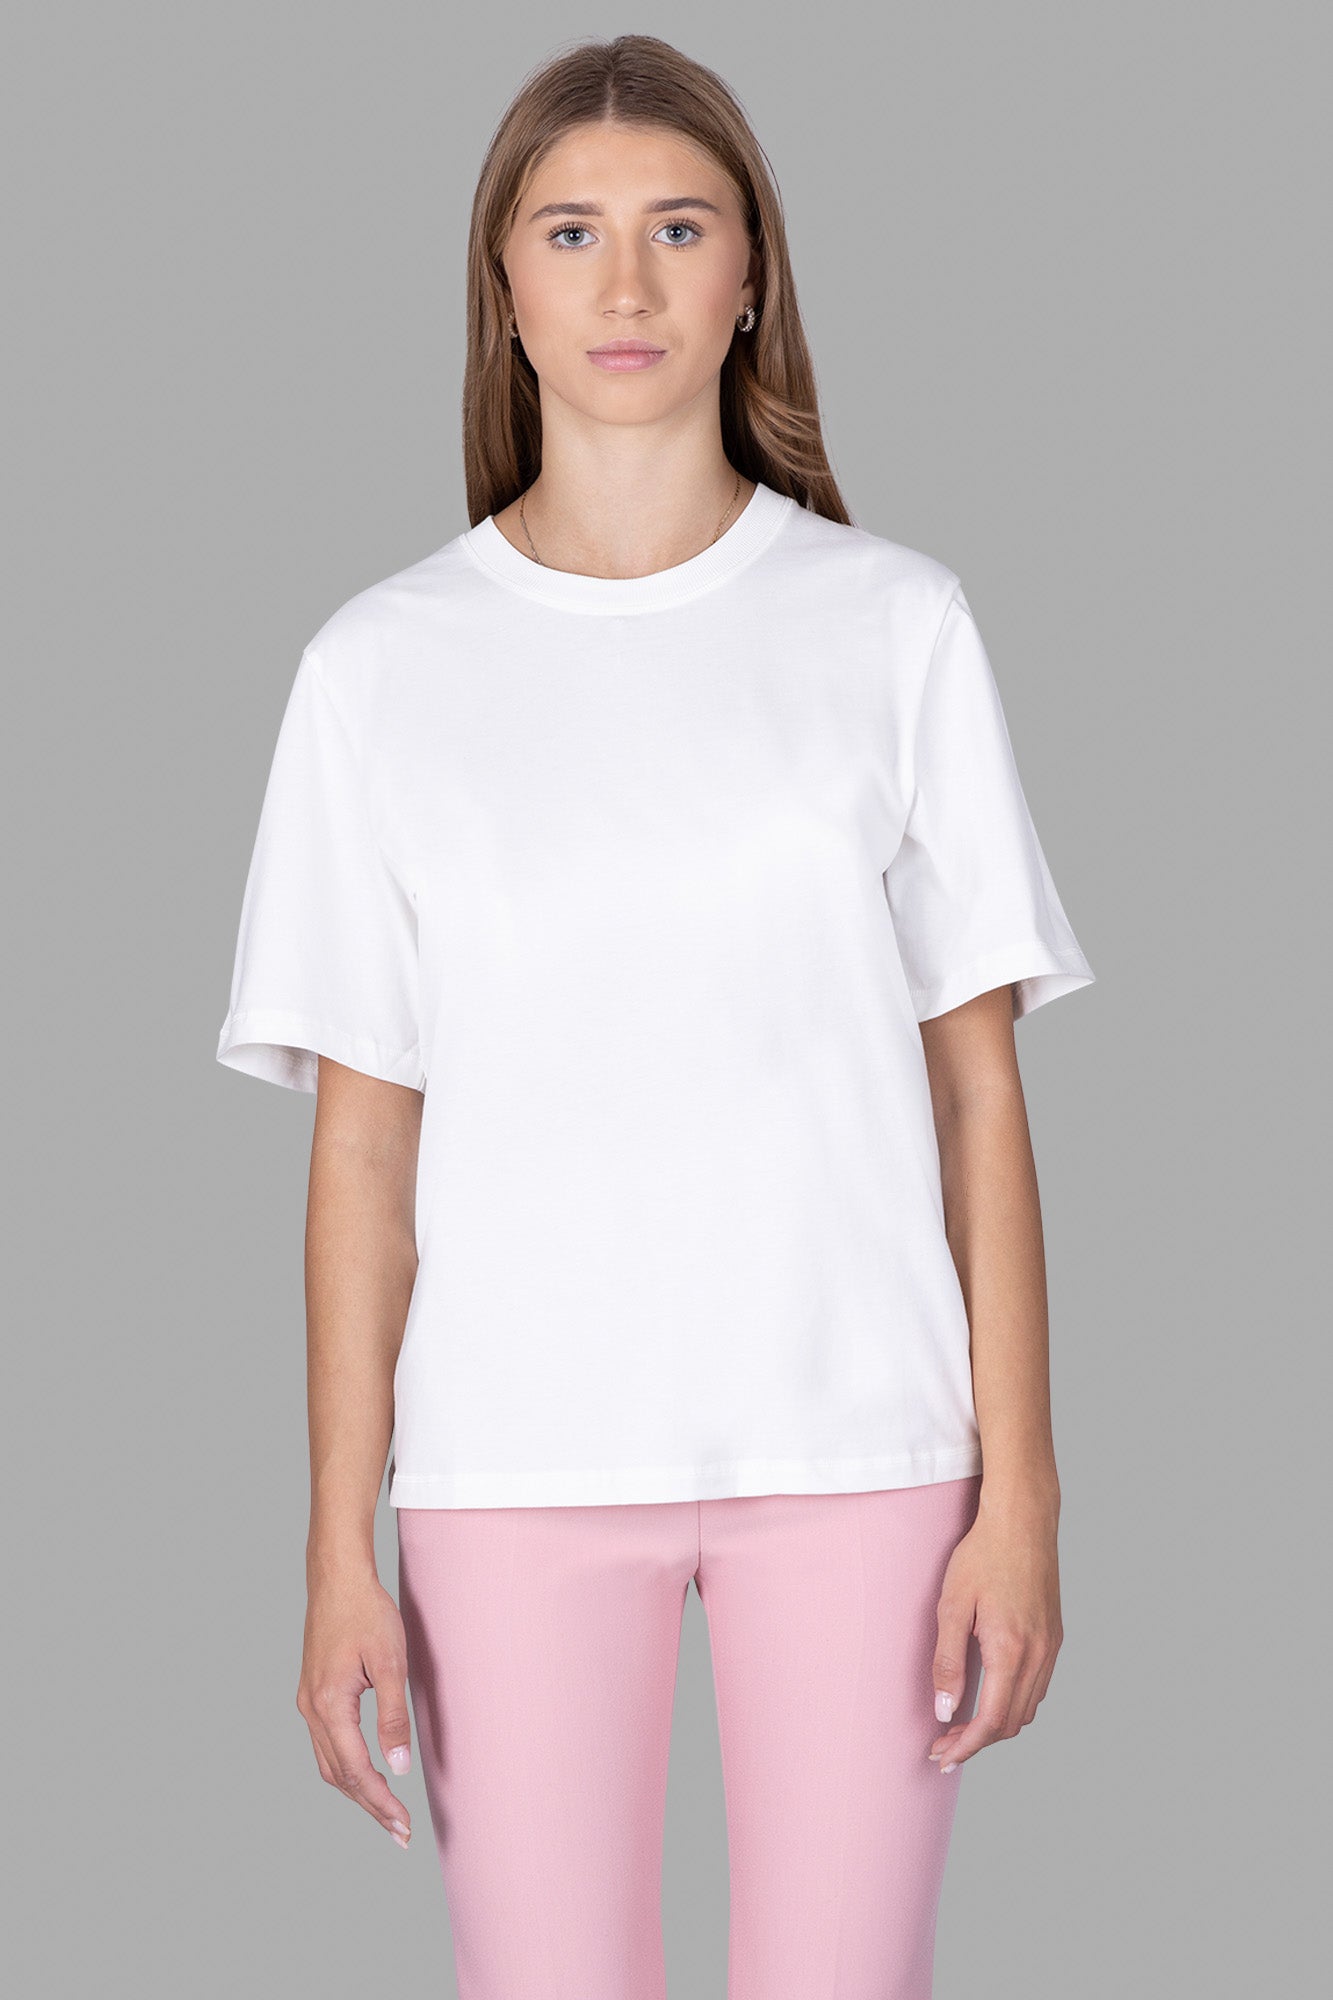 Hedil White T-shirt